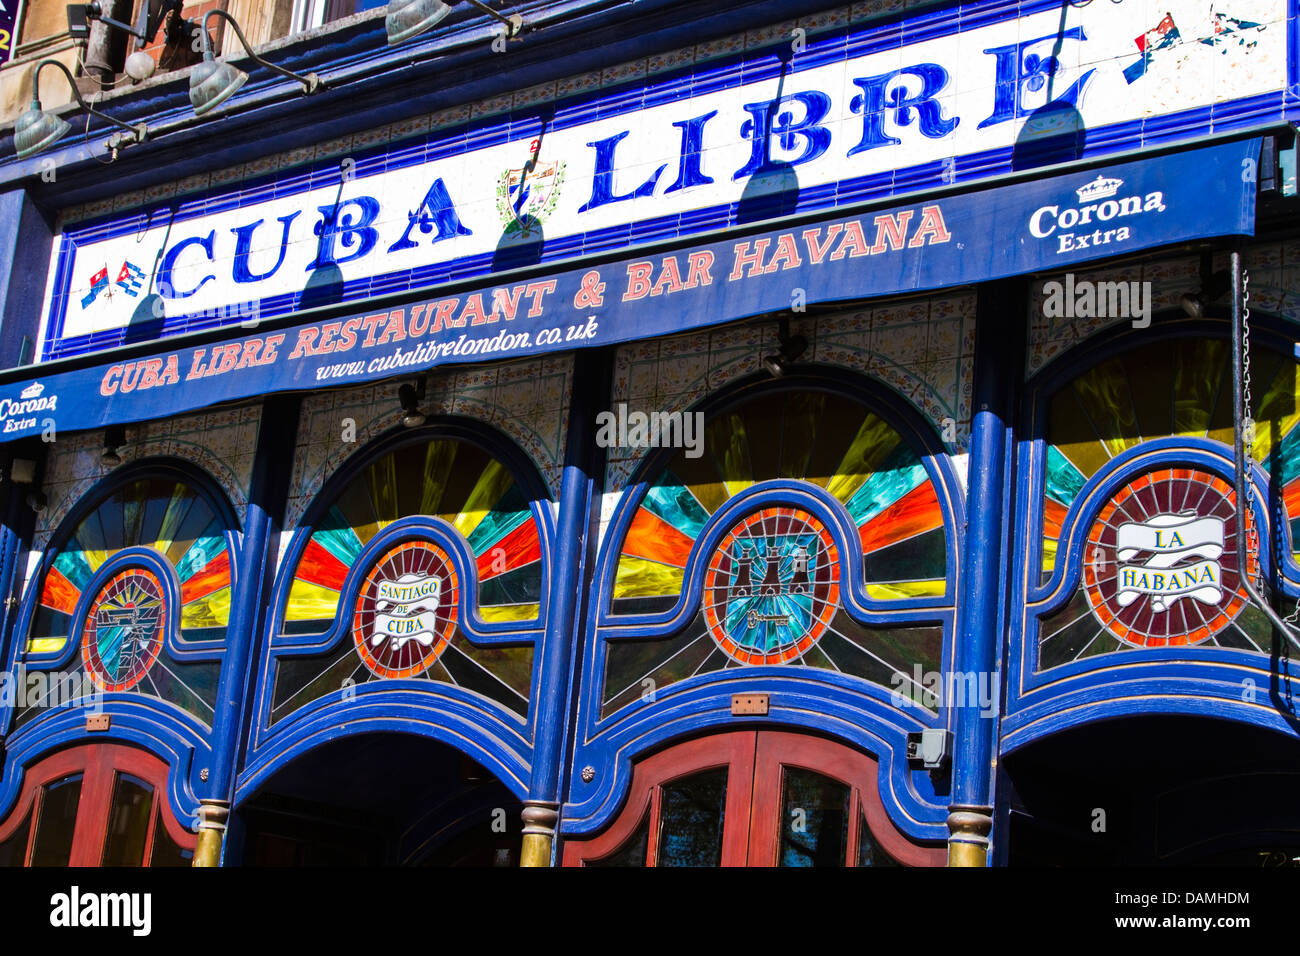 Cuba Libre restaurant front on Upper street Islington, London Stock Photo